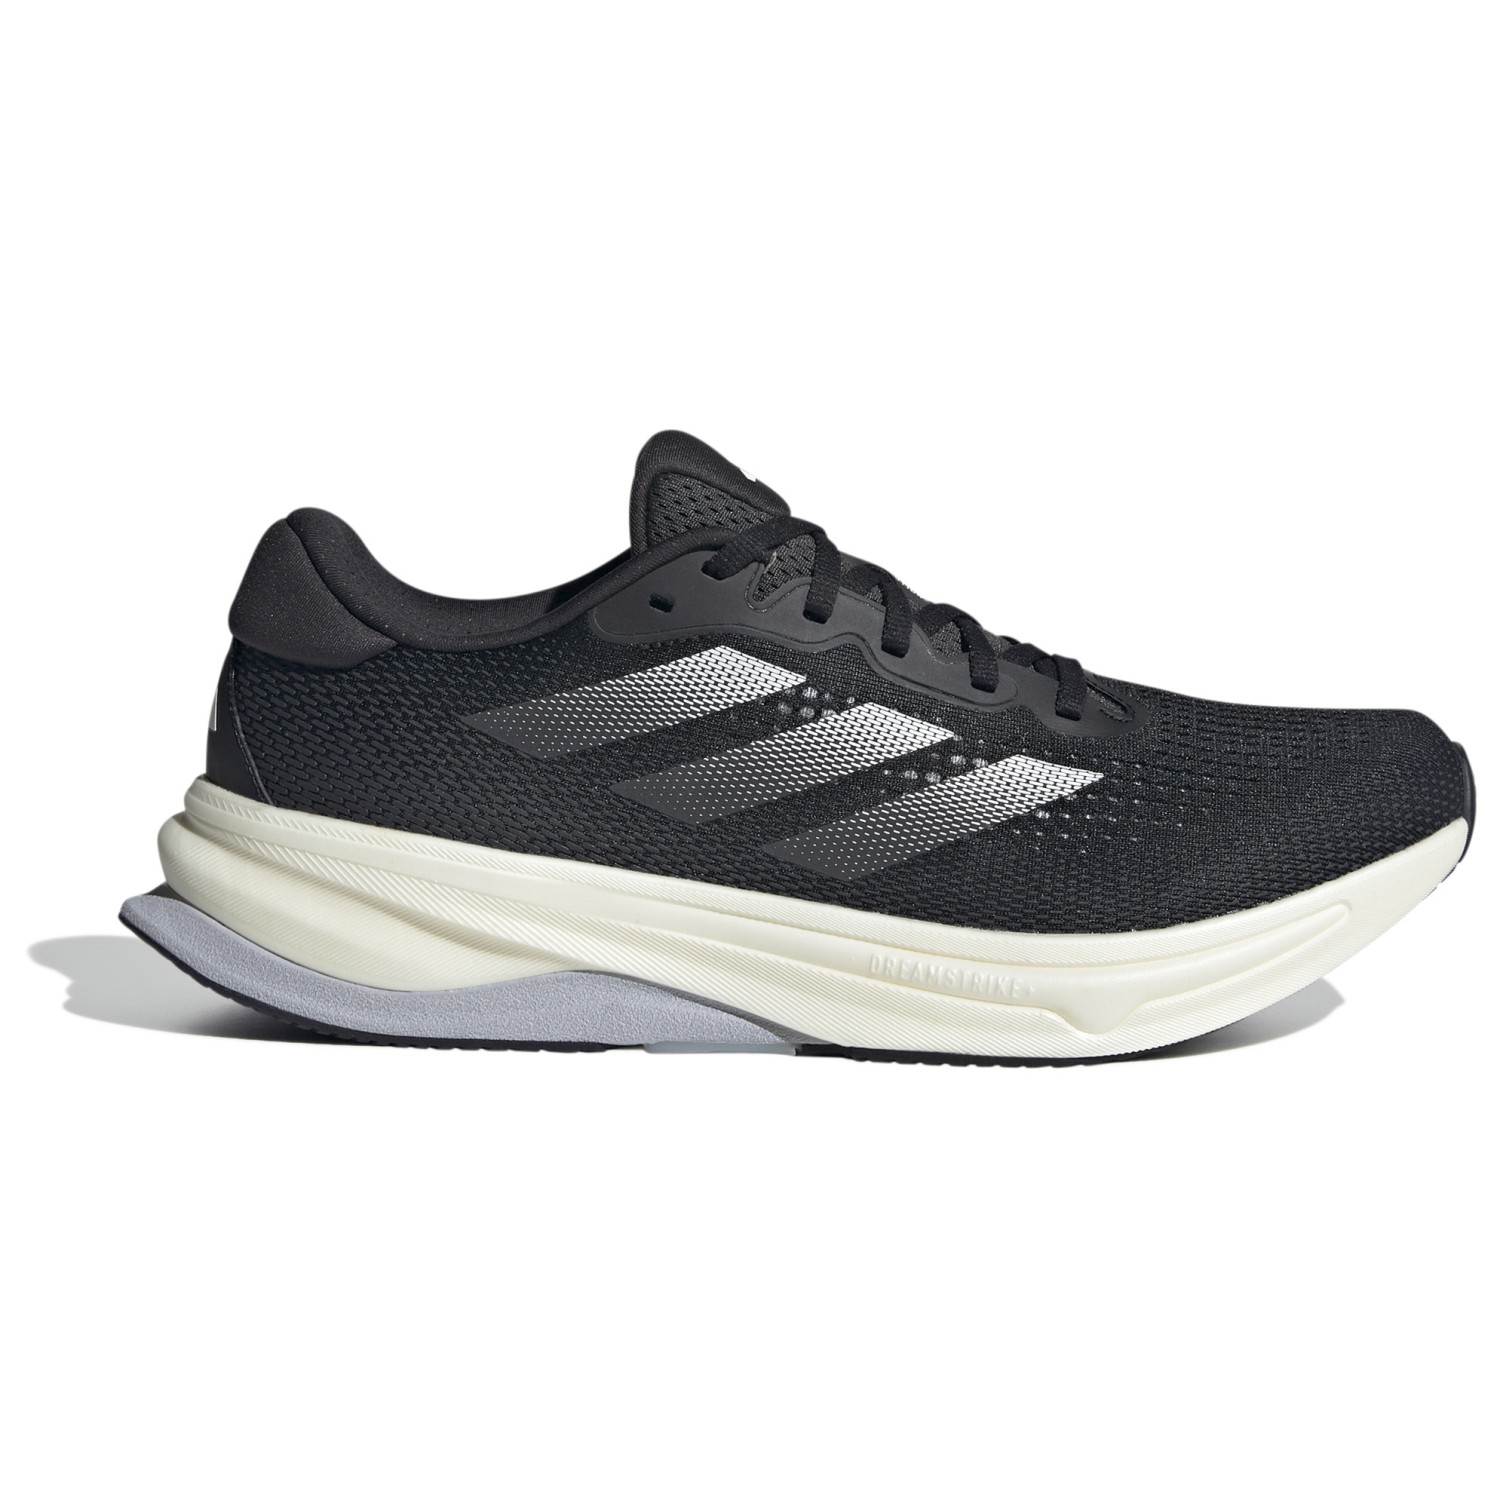 Беговая обувь Adidas Supernova Solution, цвет Core Black/Core White/Carbon беговая обувь adidas adizero adios 8 цвет carbon ftw white core black